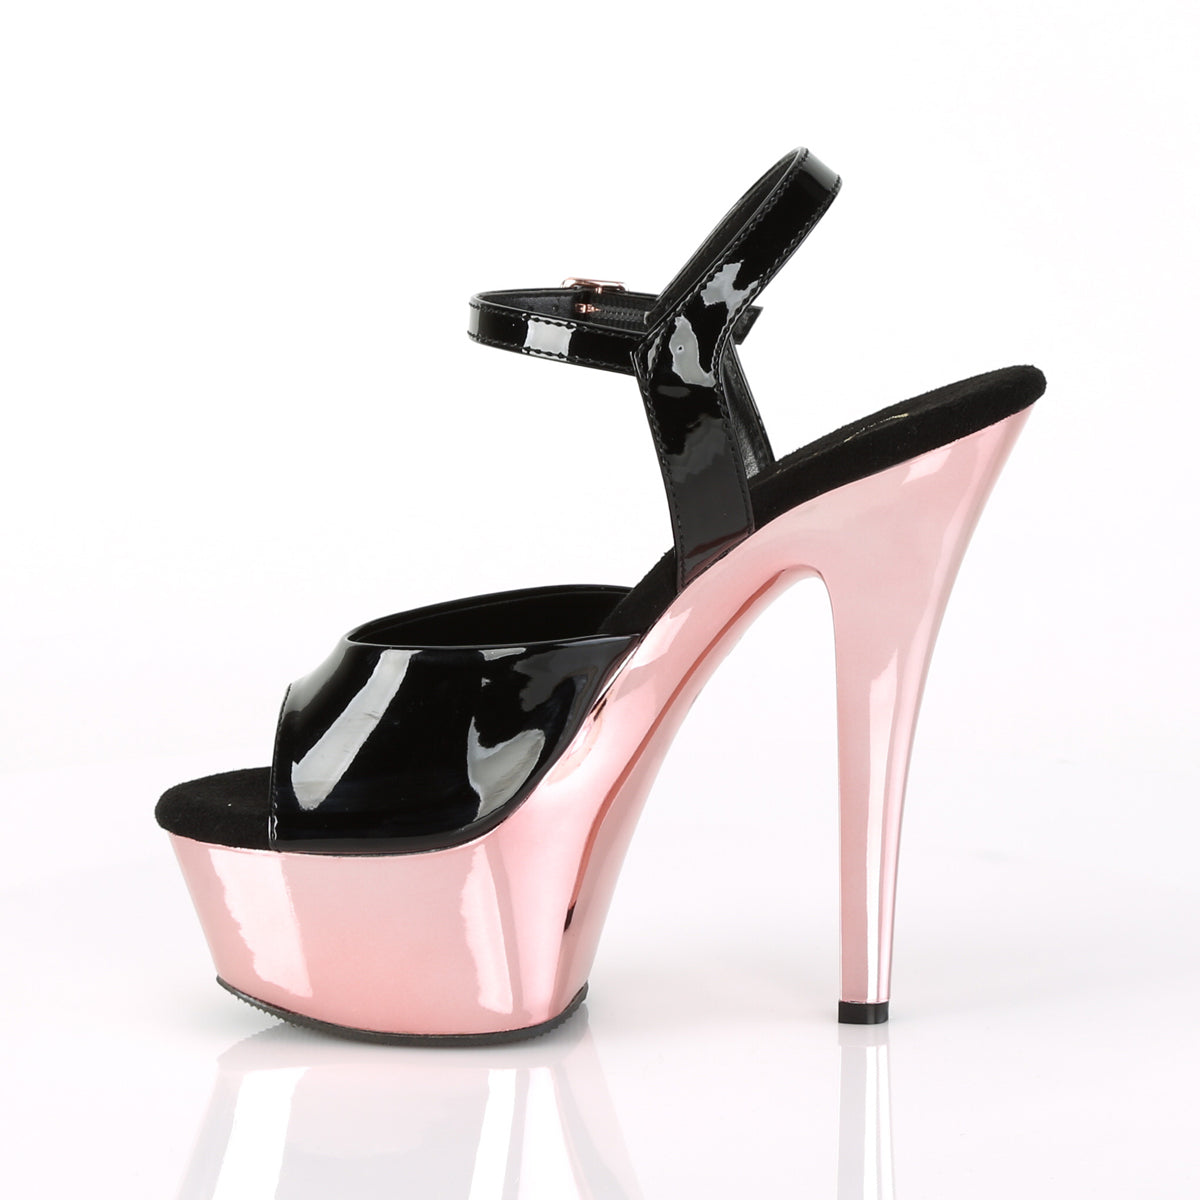 KISS-209 Black Patent/Rose Gold Chrome Platform Sandal Pleaser